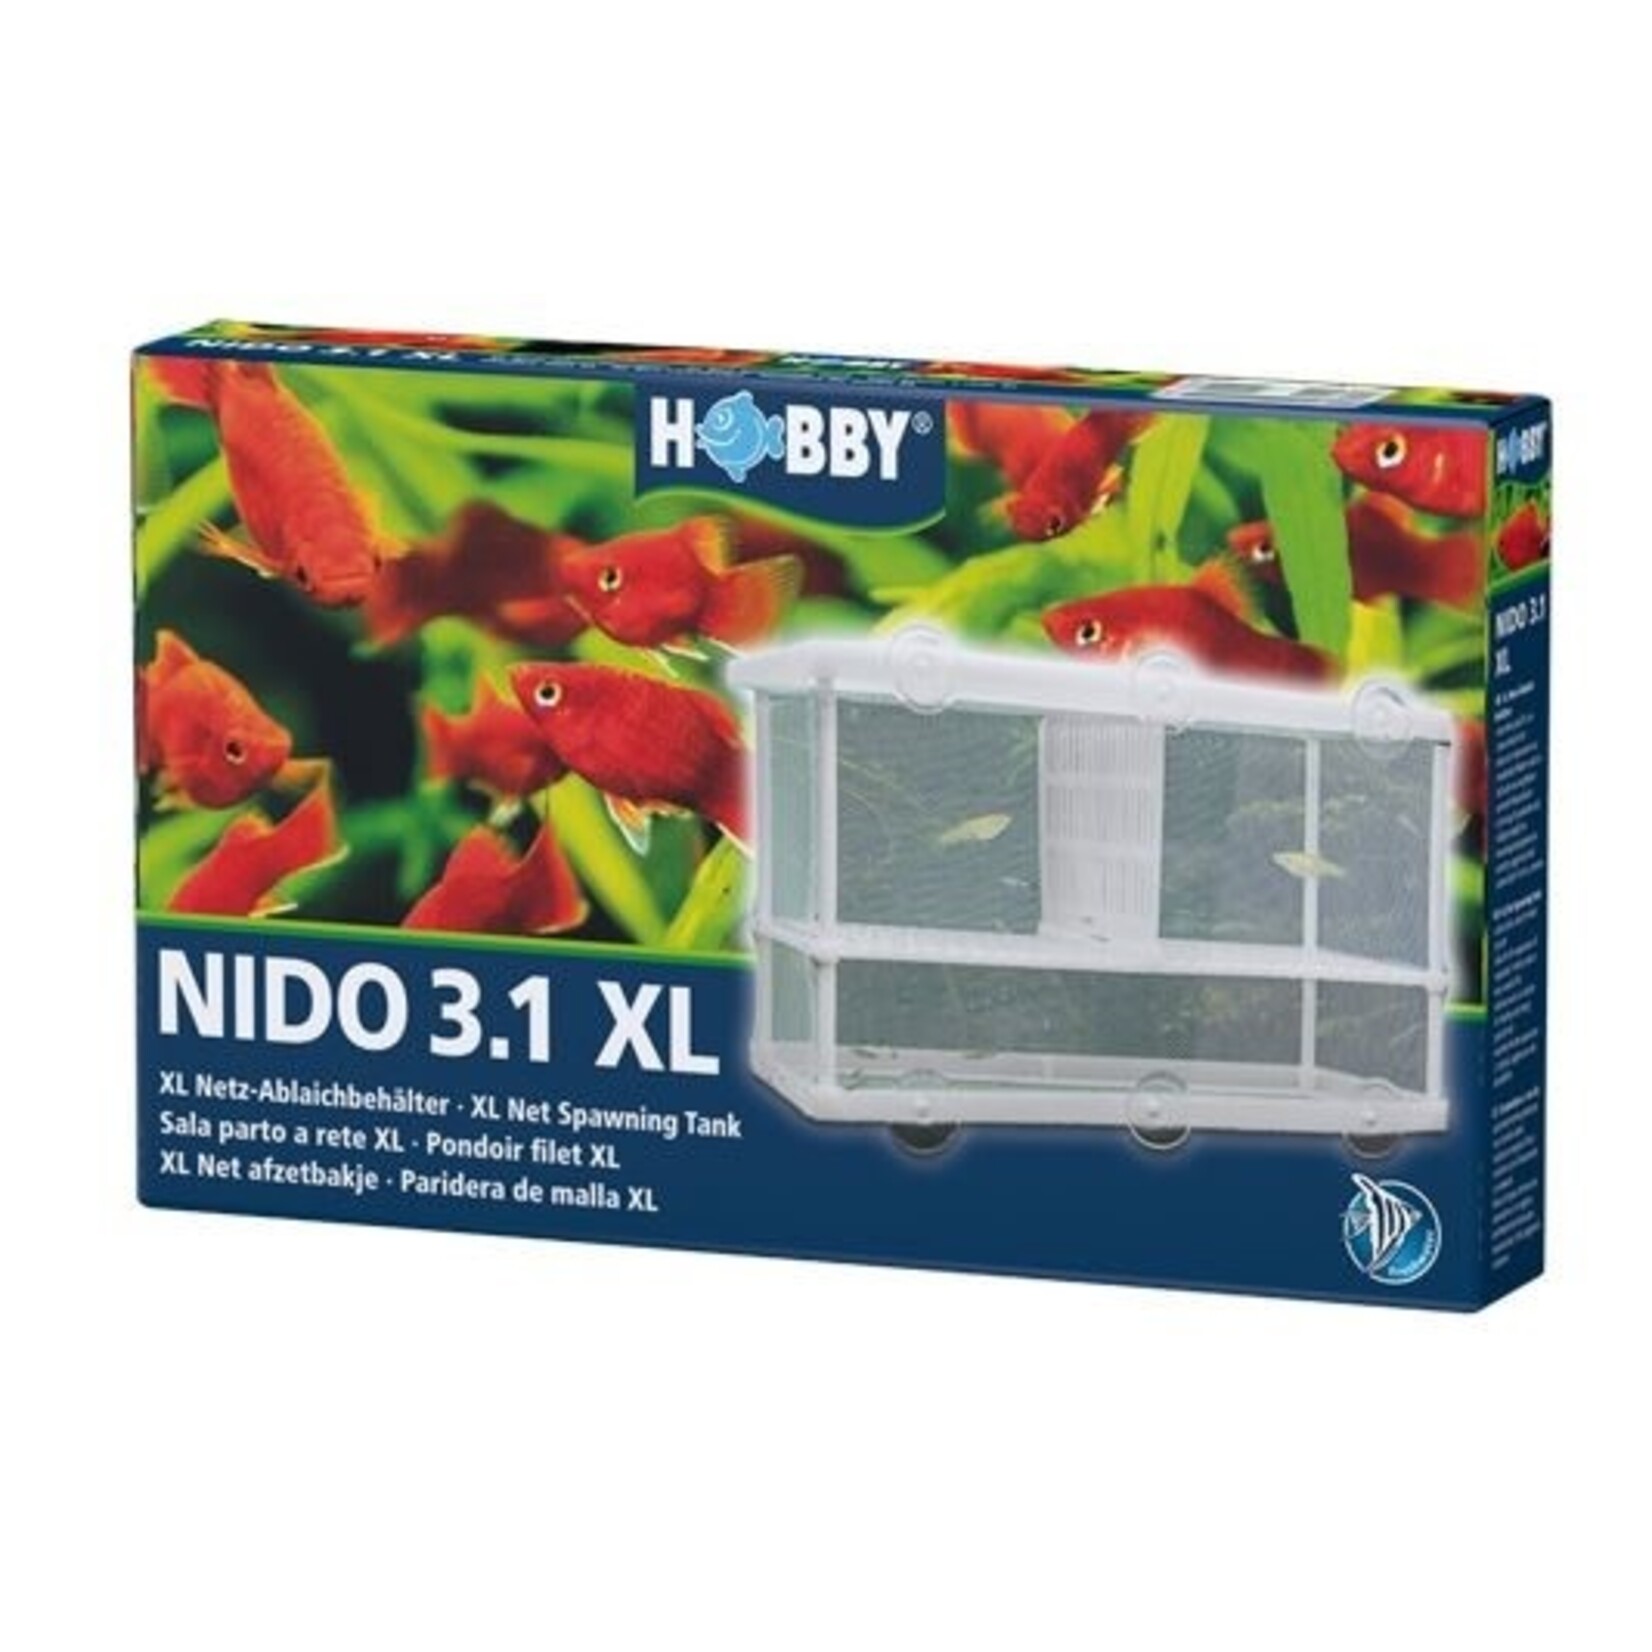 Hobby Nido 3.1 xl afzetbakje 25x15x14,5 cm